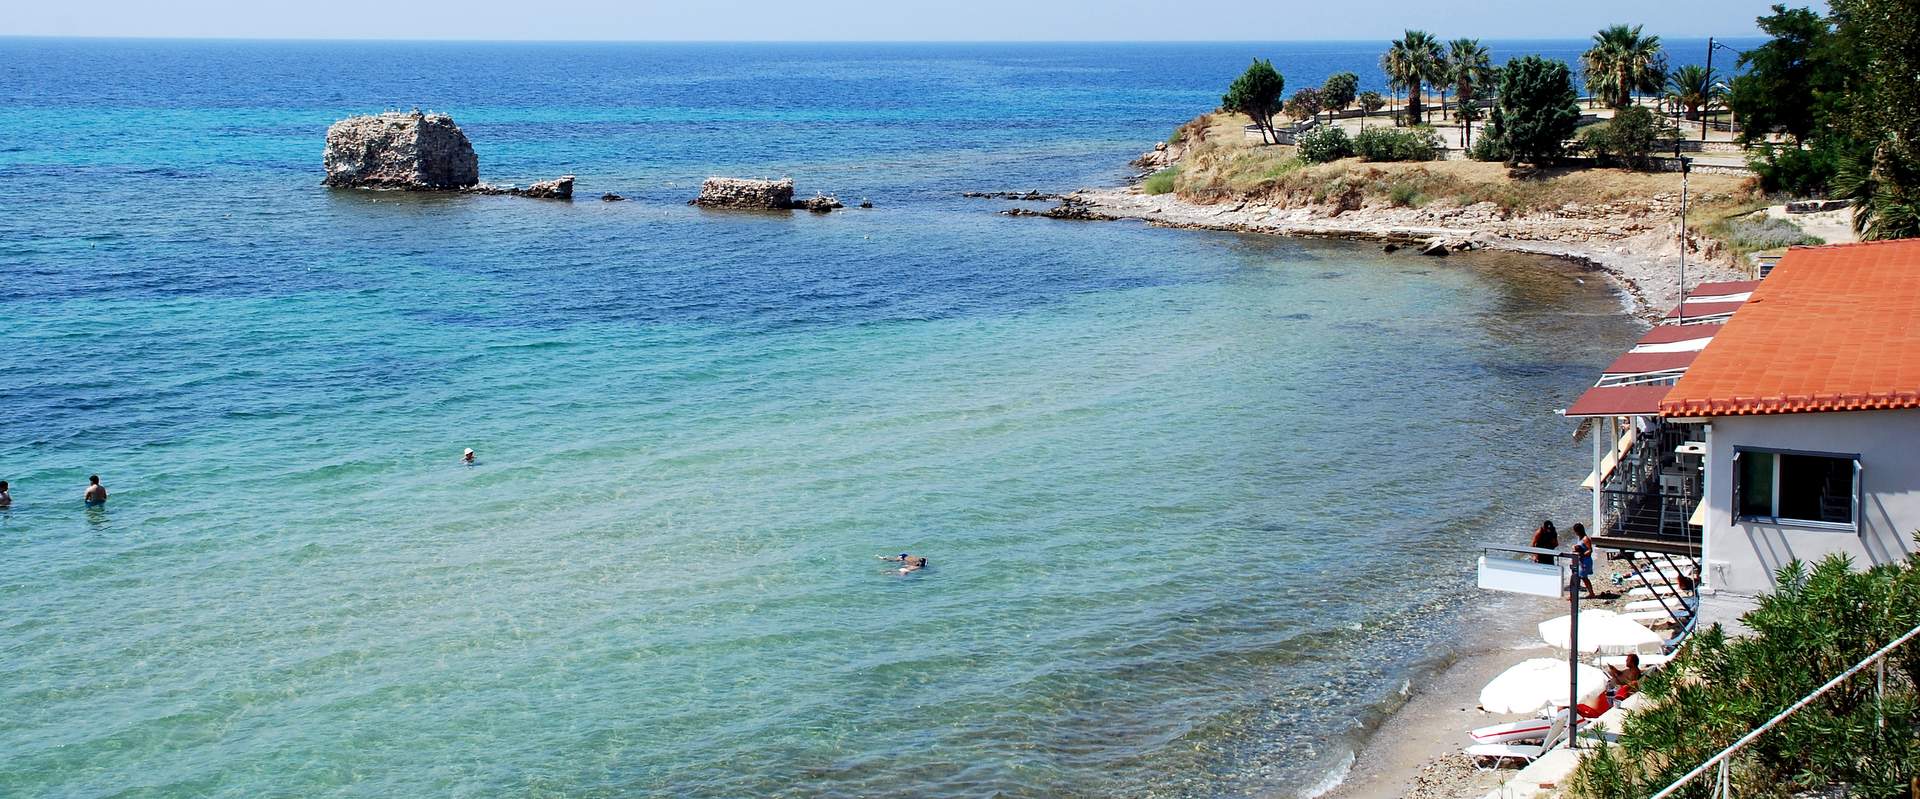 West Potidea beach, Halkidiki, Greece